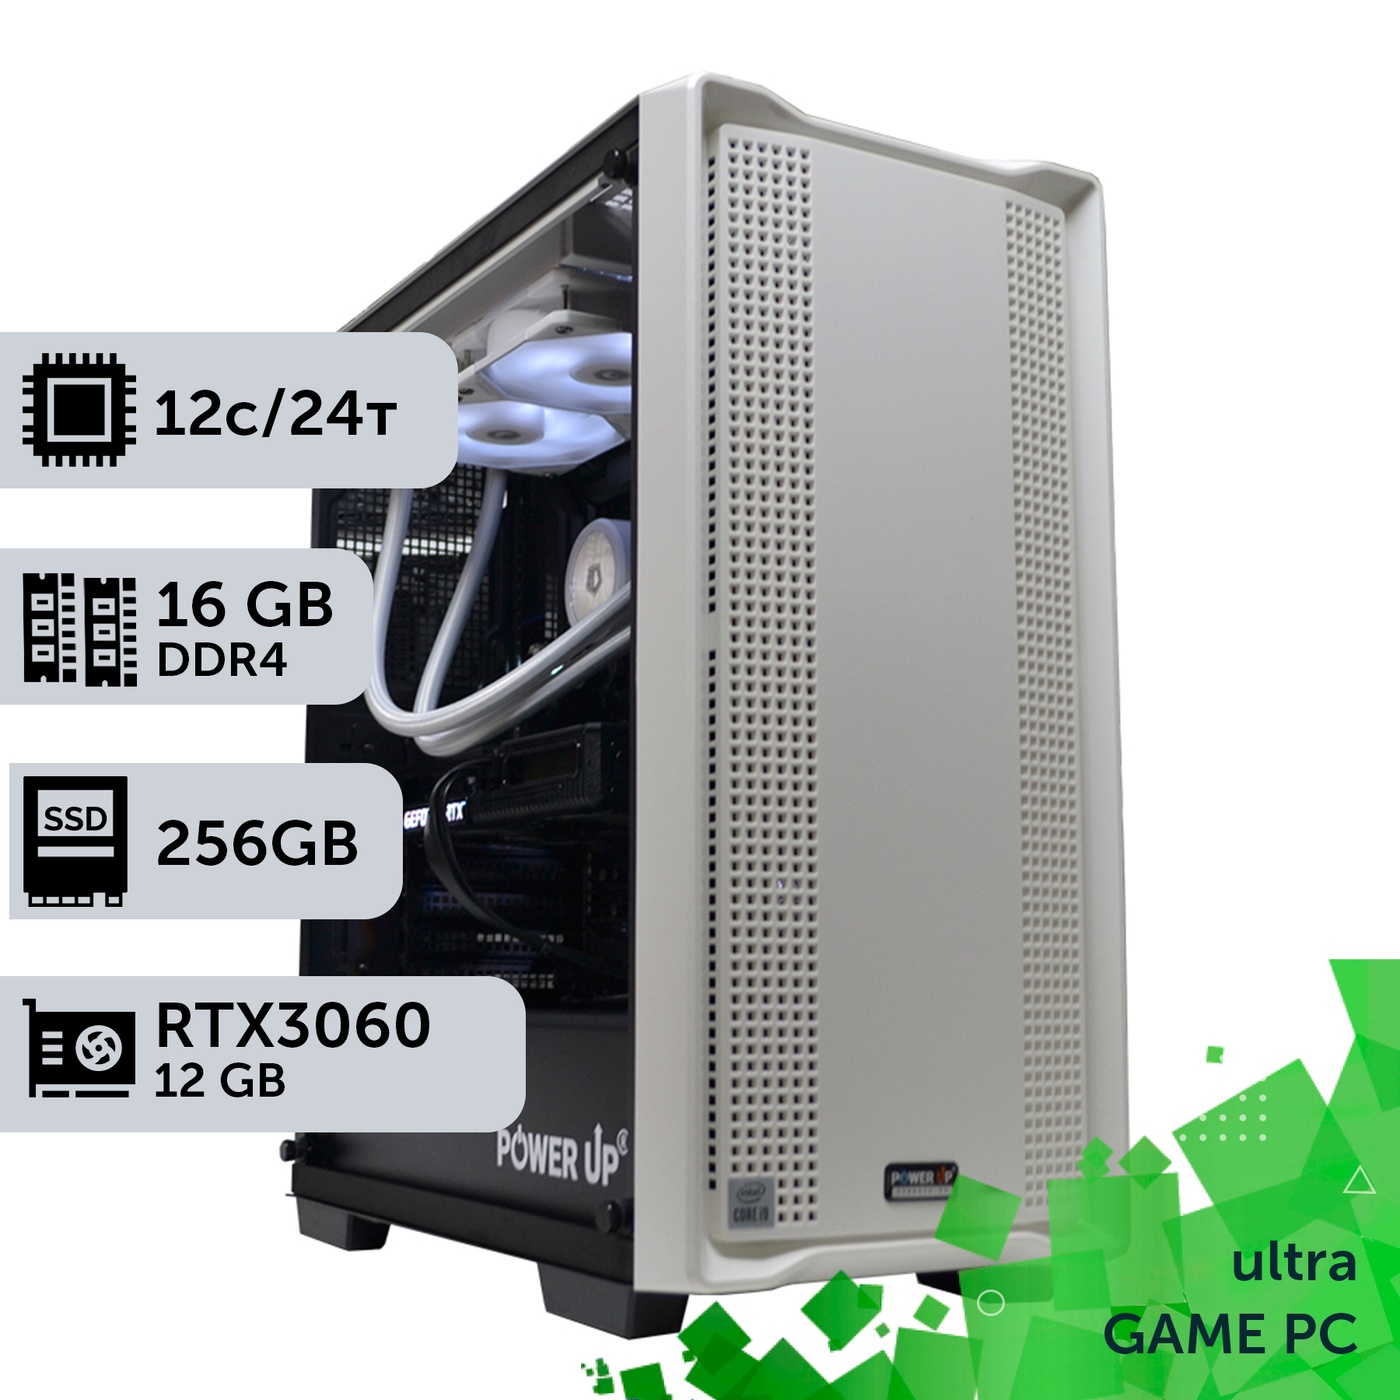 Игровой компьютер GamePC Ultra #118 Ryzen 9 5900x/16 GB/HDD 1 TB/SSD 256GB/GeForce RTX 3060 12GB